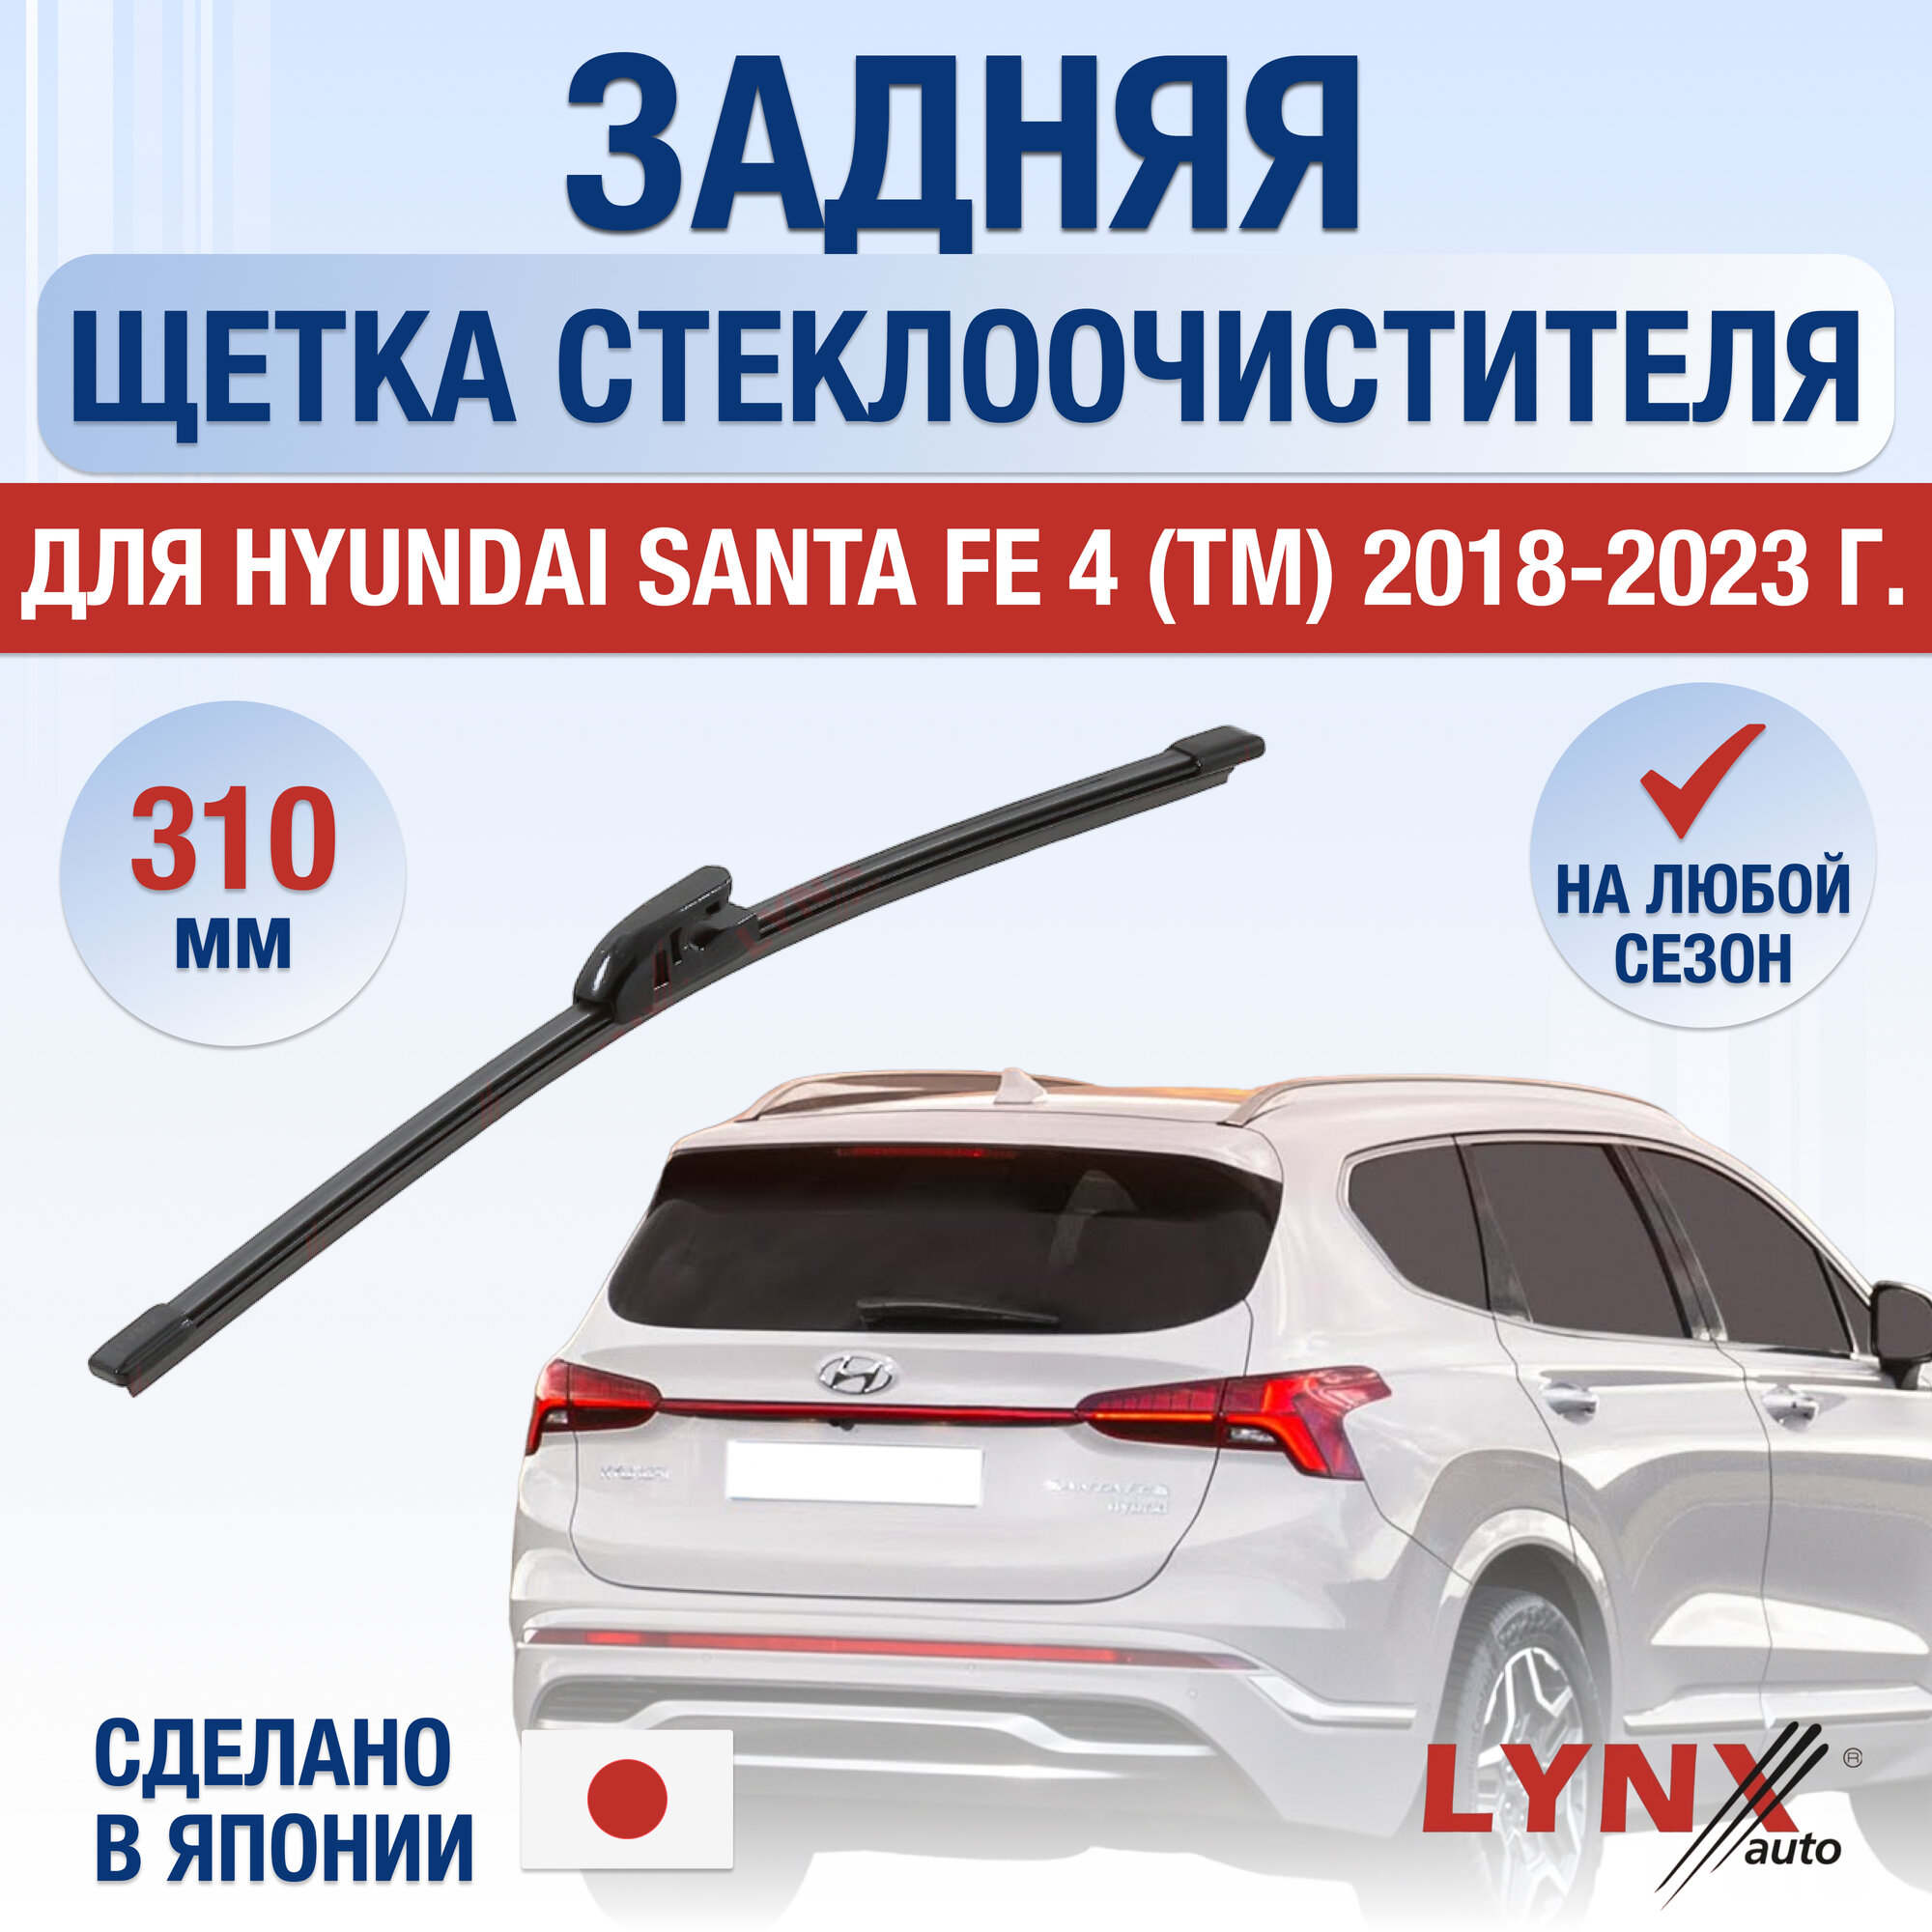 Задняя щетка стеклоочистителя для Hyundai Santa Fe 4 (TM) / 2018 2019 2020 2021 2022 2023 / Задний дворник 300 мм Хендай Санта Фе